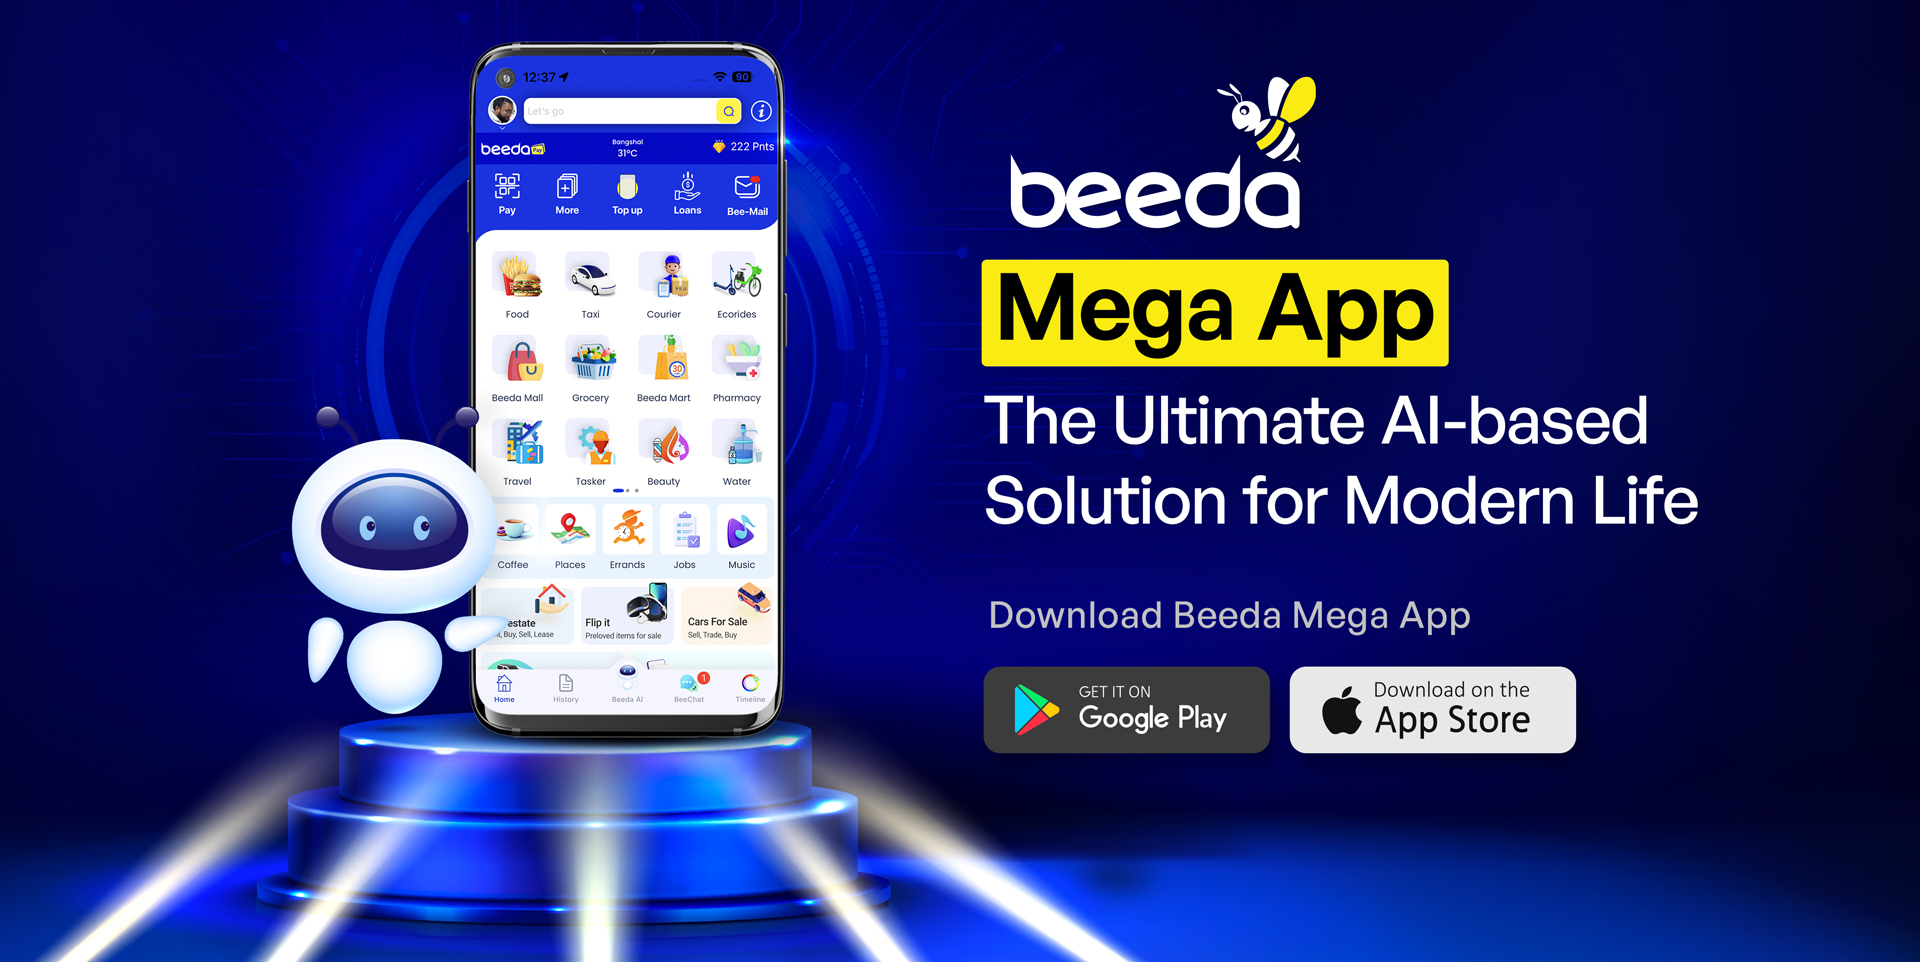 Beeda Mega App: The Godfather of Super Apps